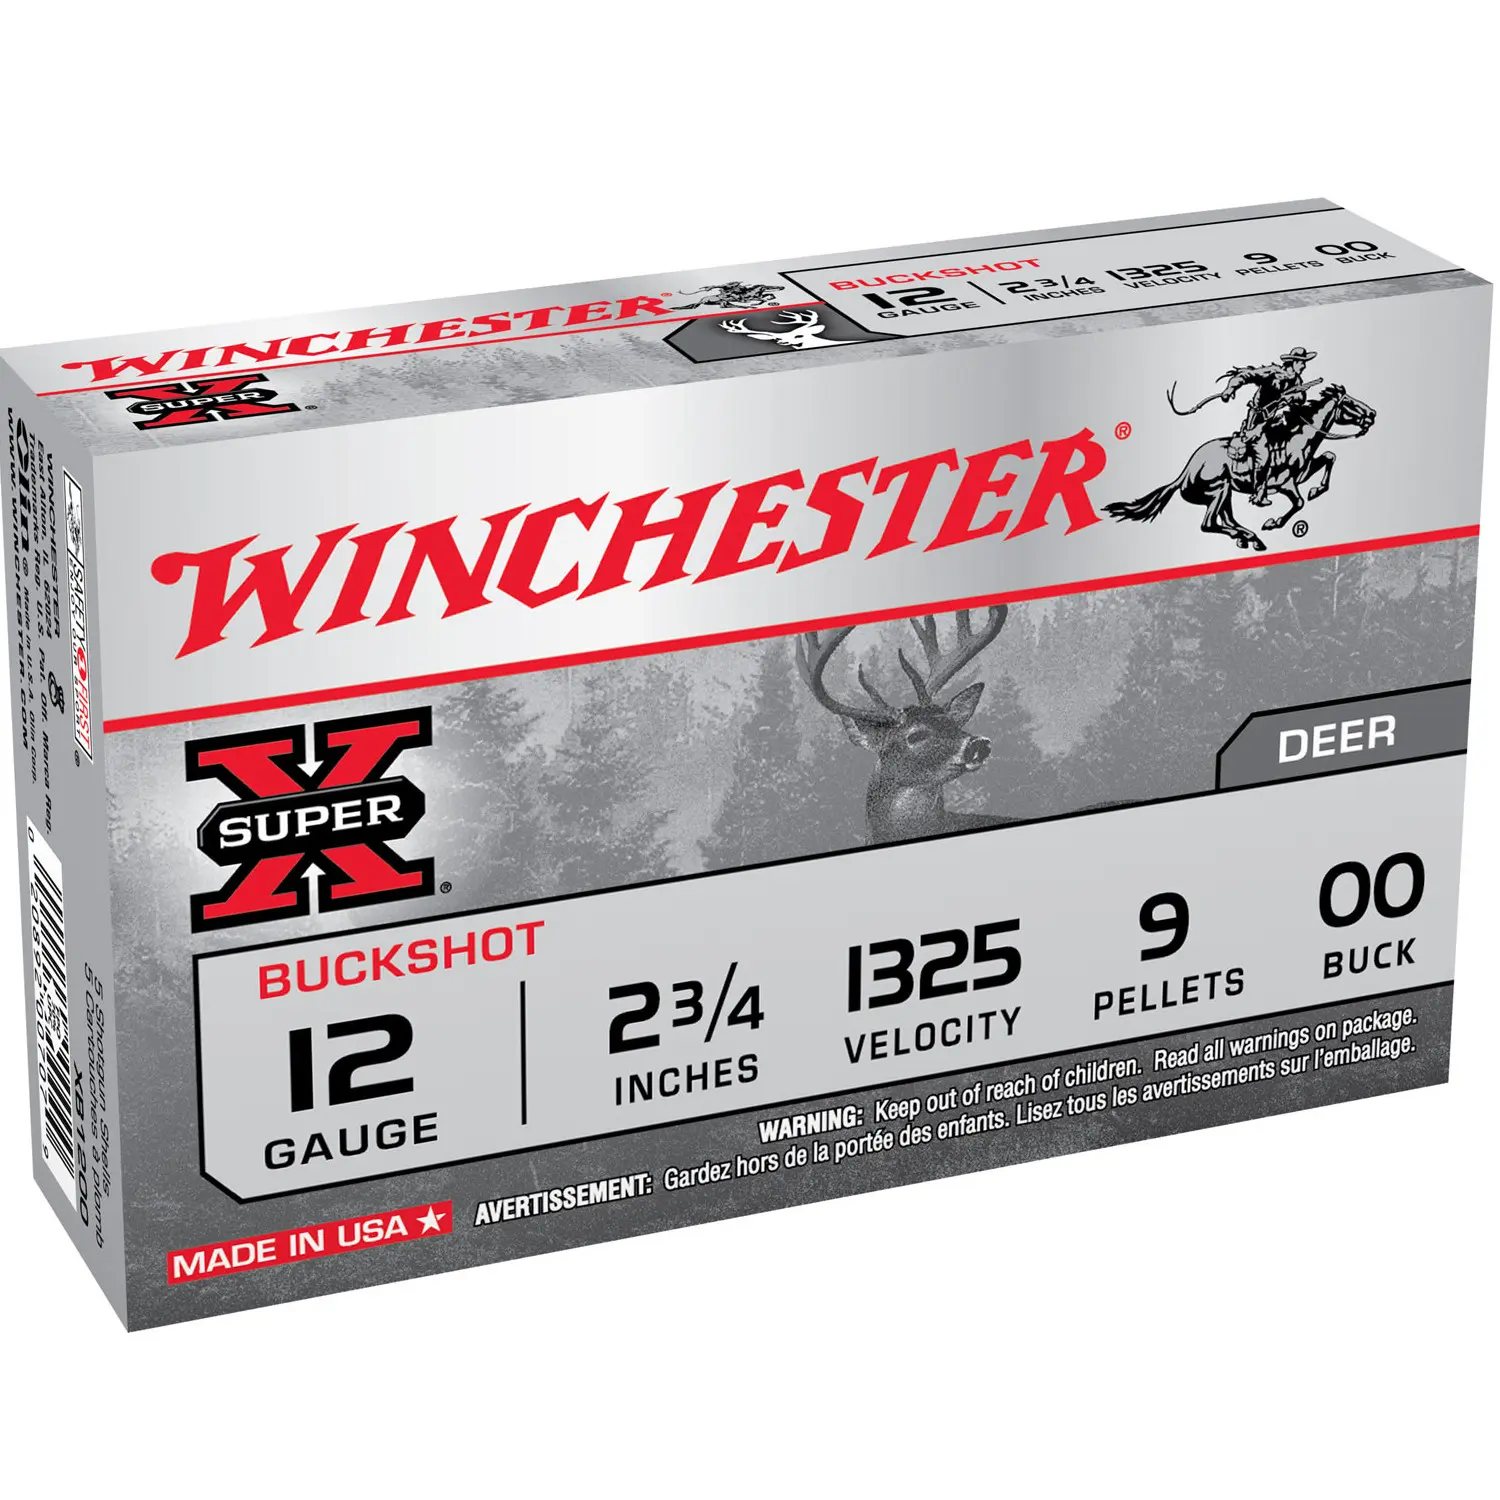 12 Gauge Ammunition for Sale. Winchester 1 oz. #7 Shot - 25 Rounds